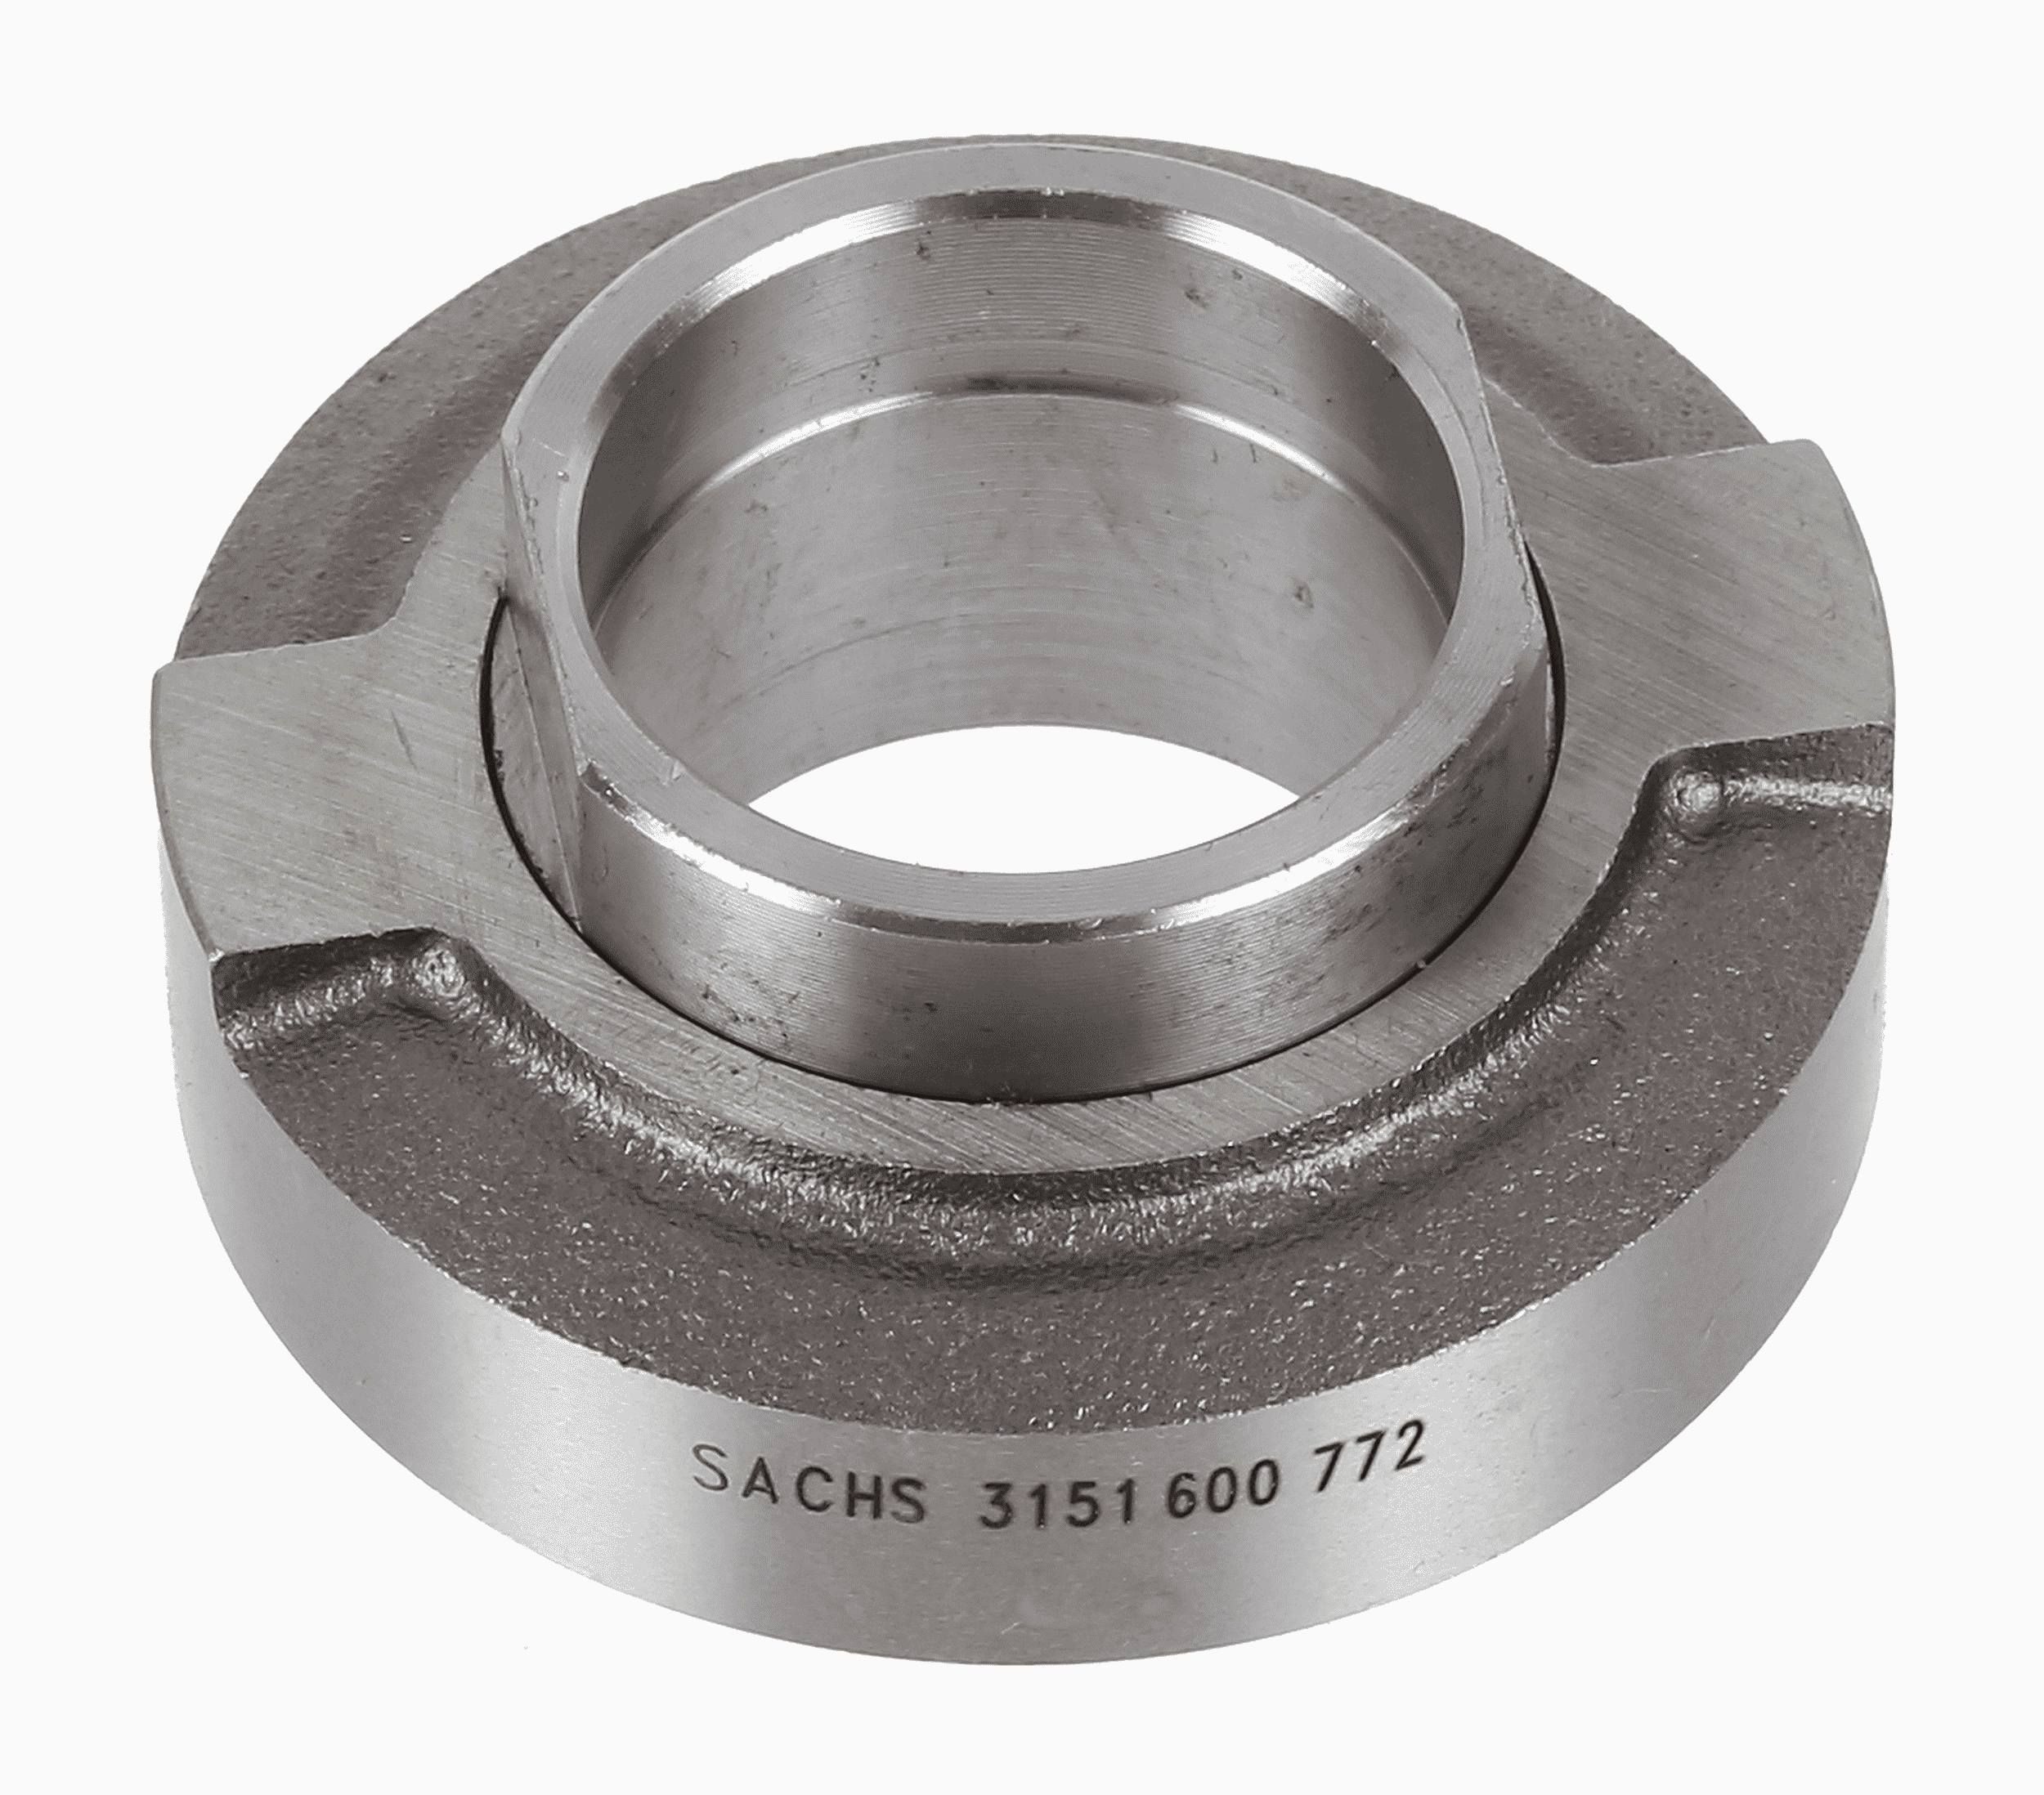 SACHS Clutch bearing 3151 600 772 buy